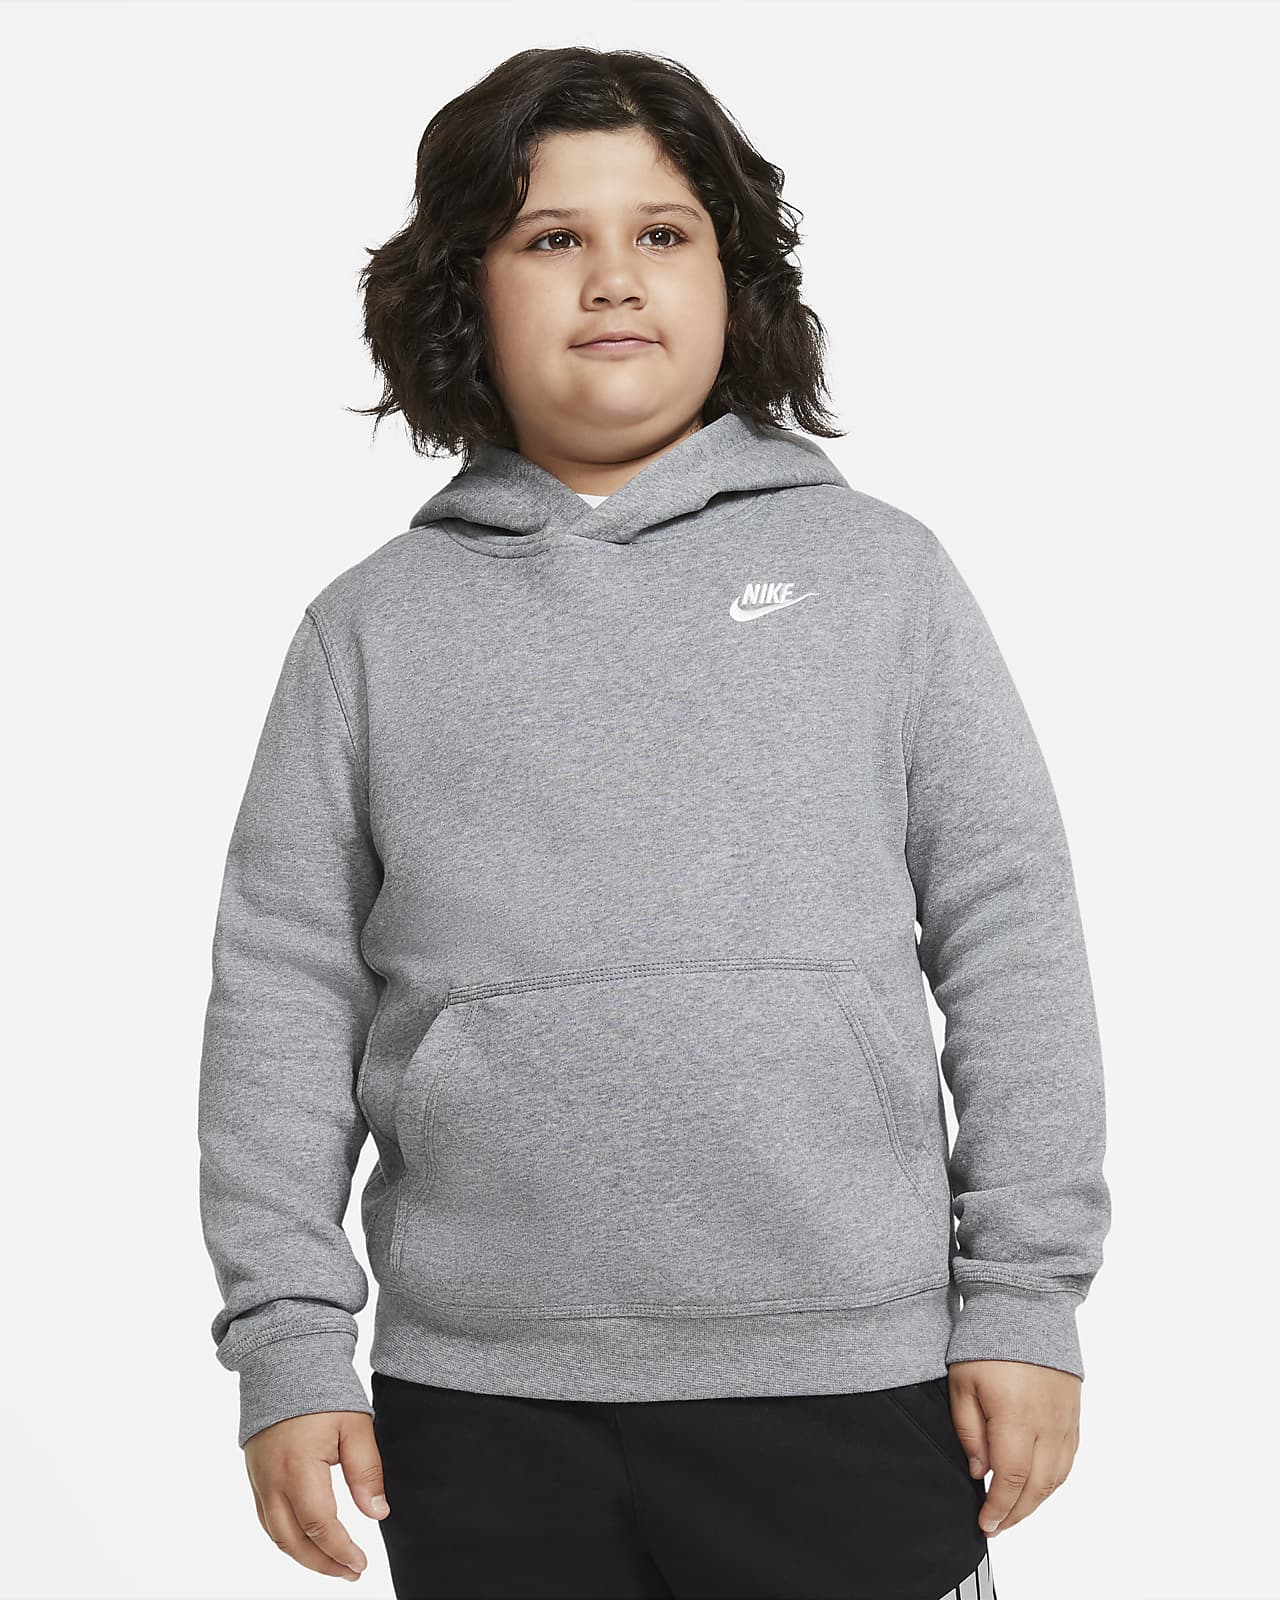 Nike Pullover Kids